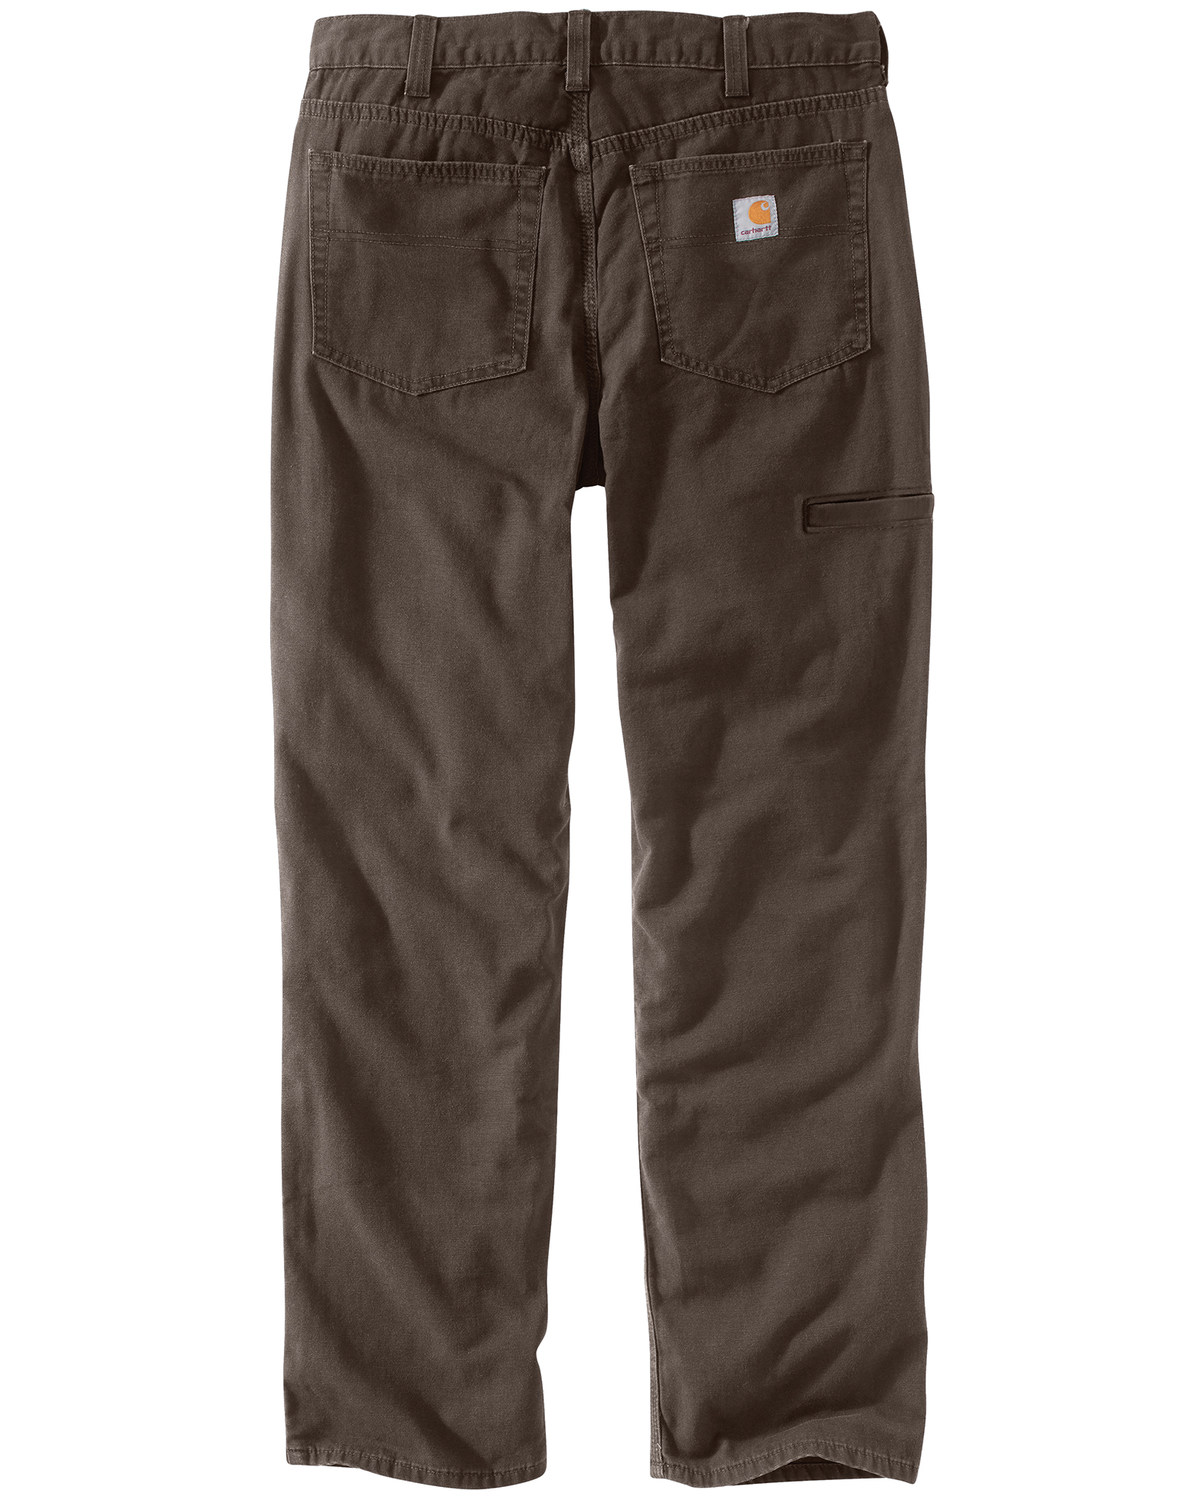 Carhartt Men's Rugged Flex Rigby Five-Pocket Jeans